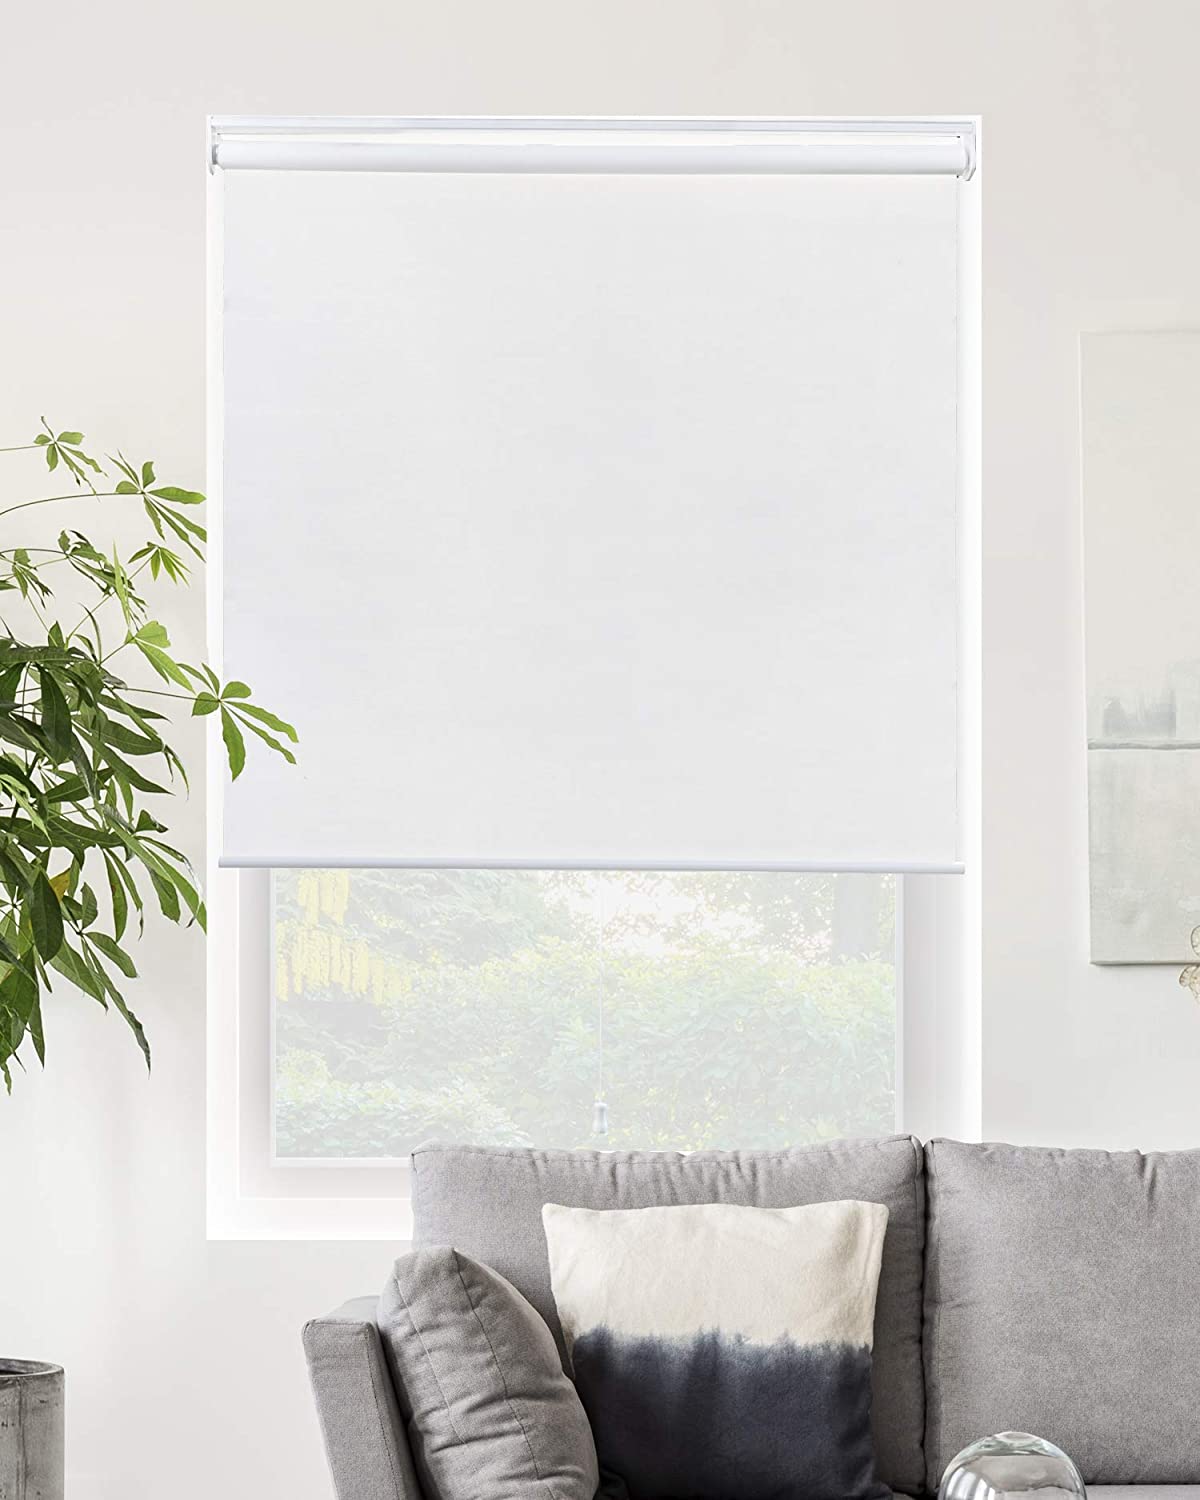 types of blinds - white roller blind on window